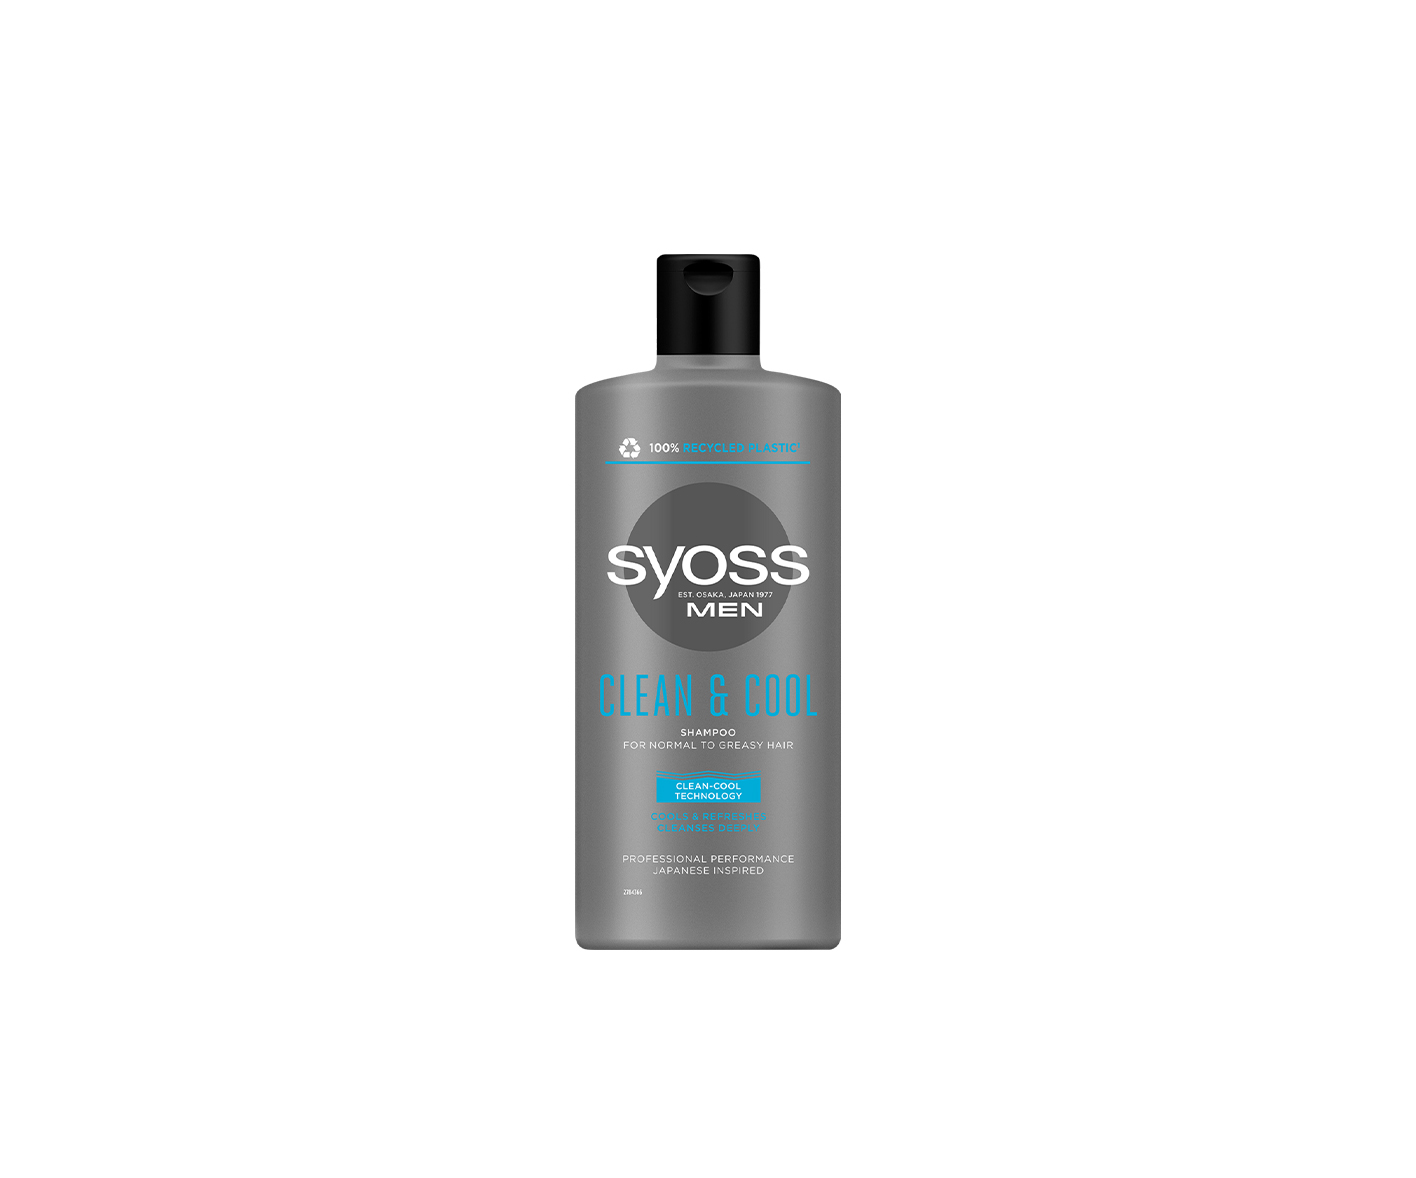 SYOSS MEN Clean & Cool, Shampoo für Männer